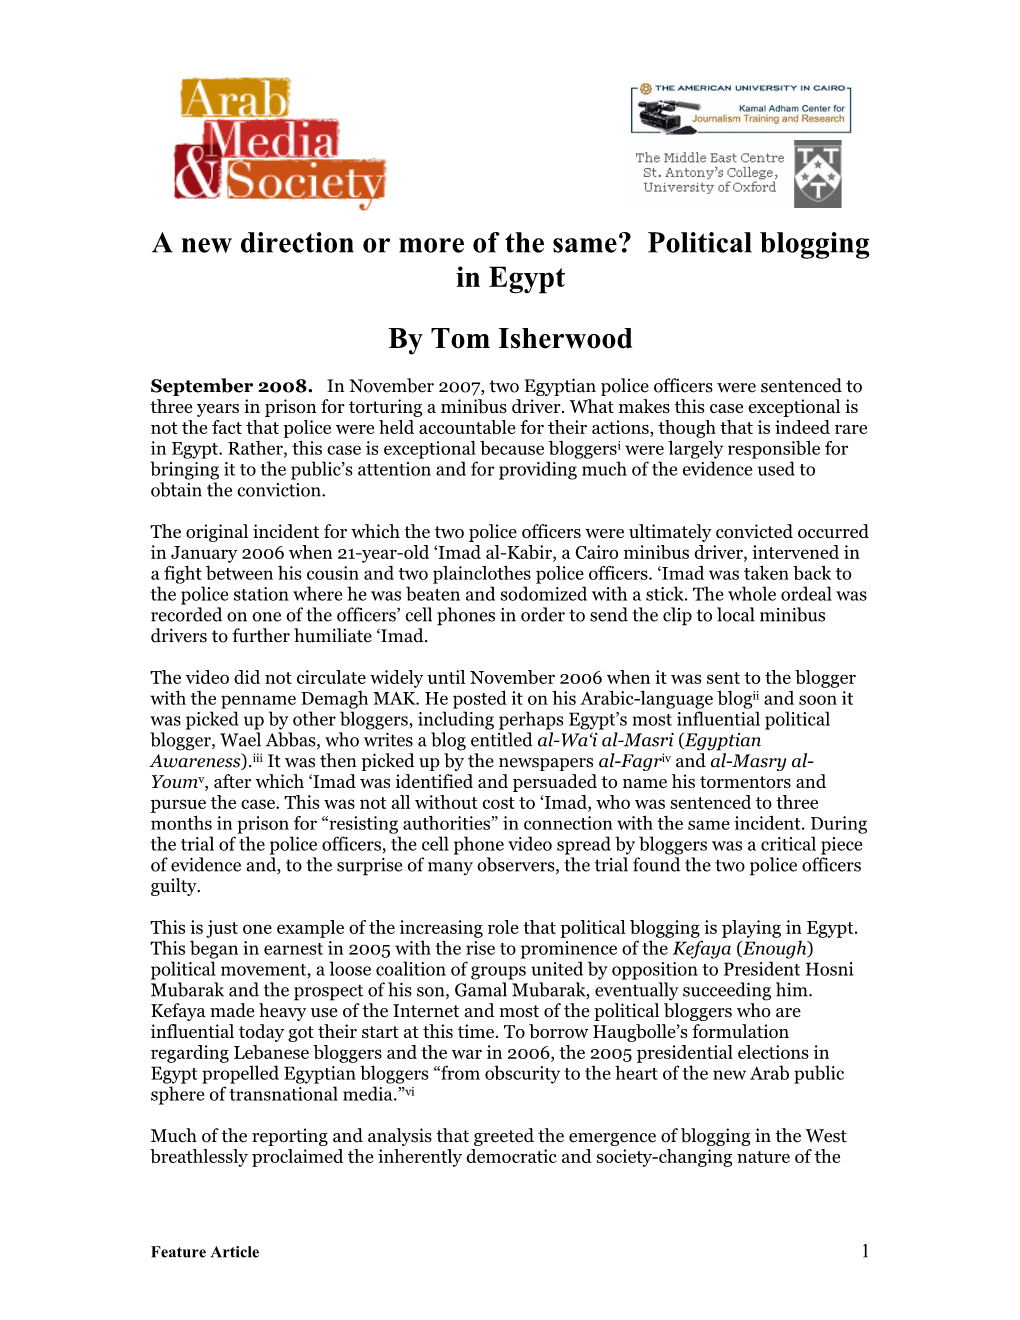 Political Blogging in Egypt by Tom Isherwood